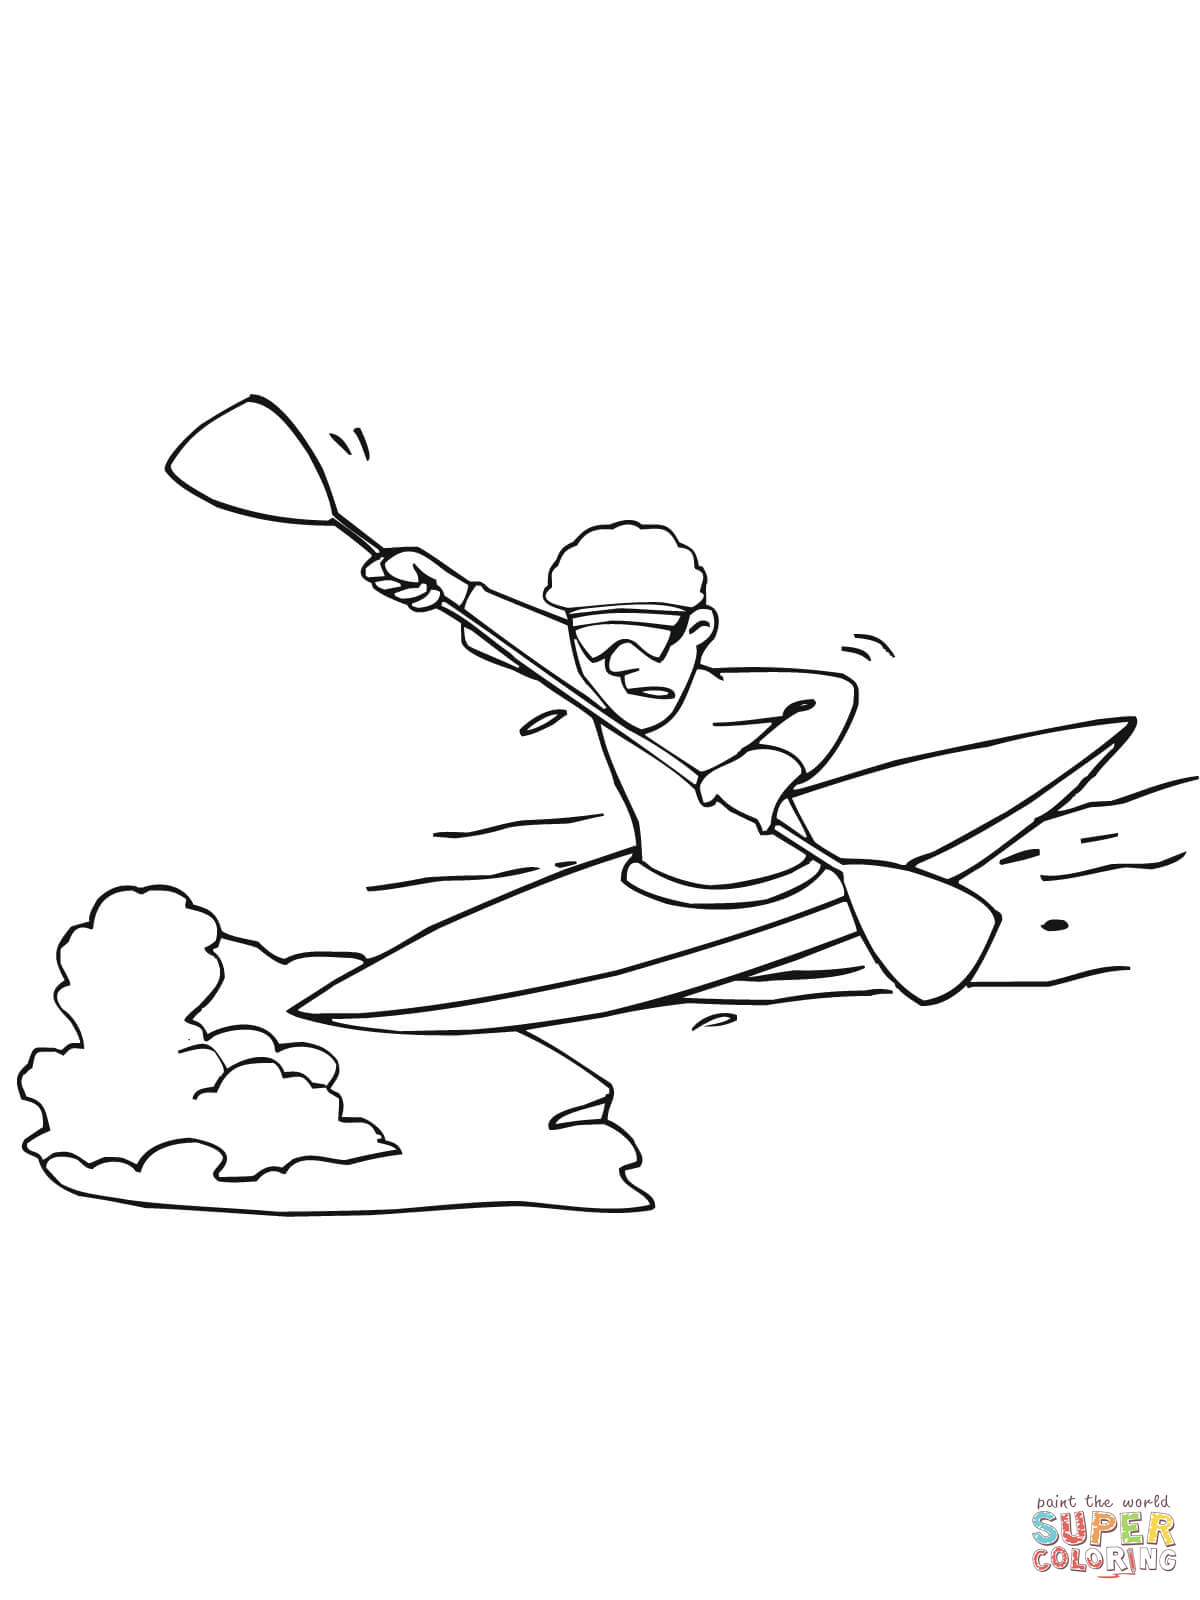 Man paddling on kayak coloring page free printable coloring pages